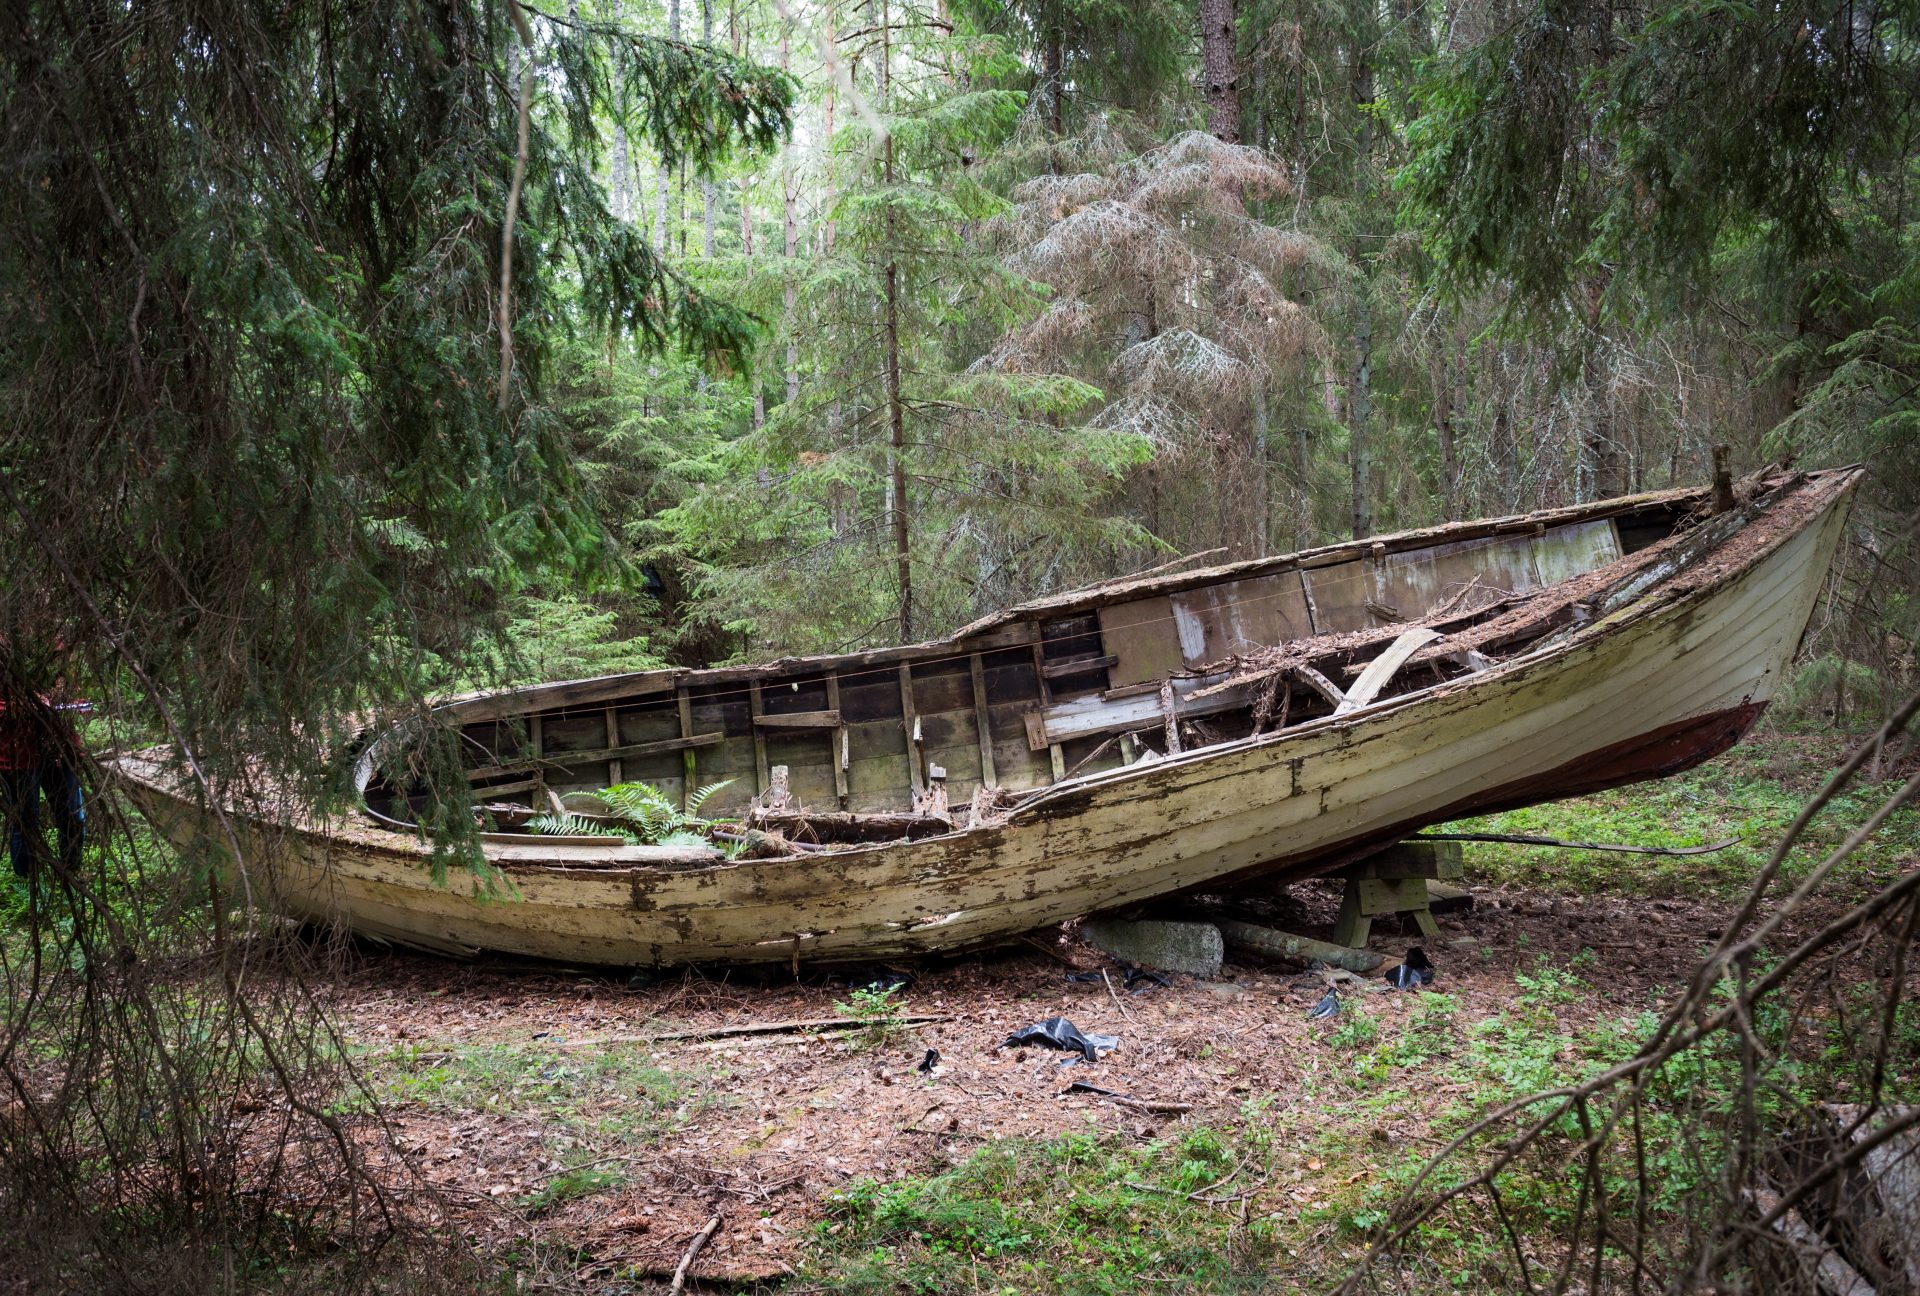 En övergiven båt i en skog